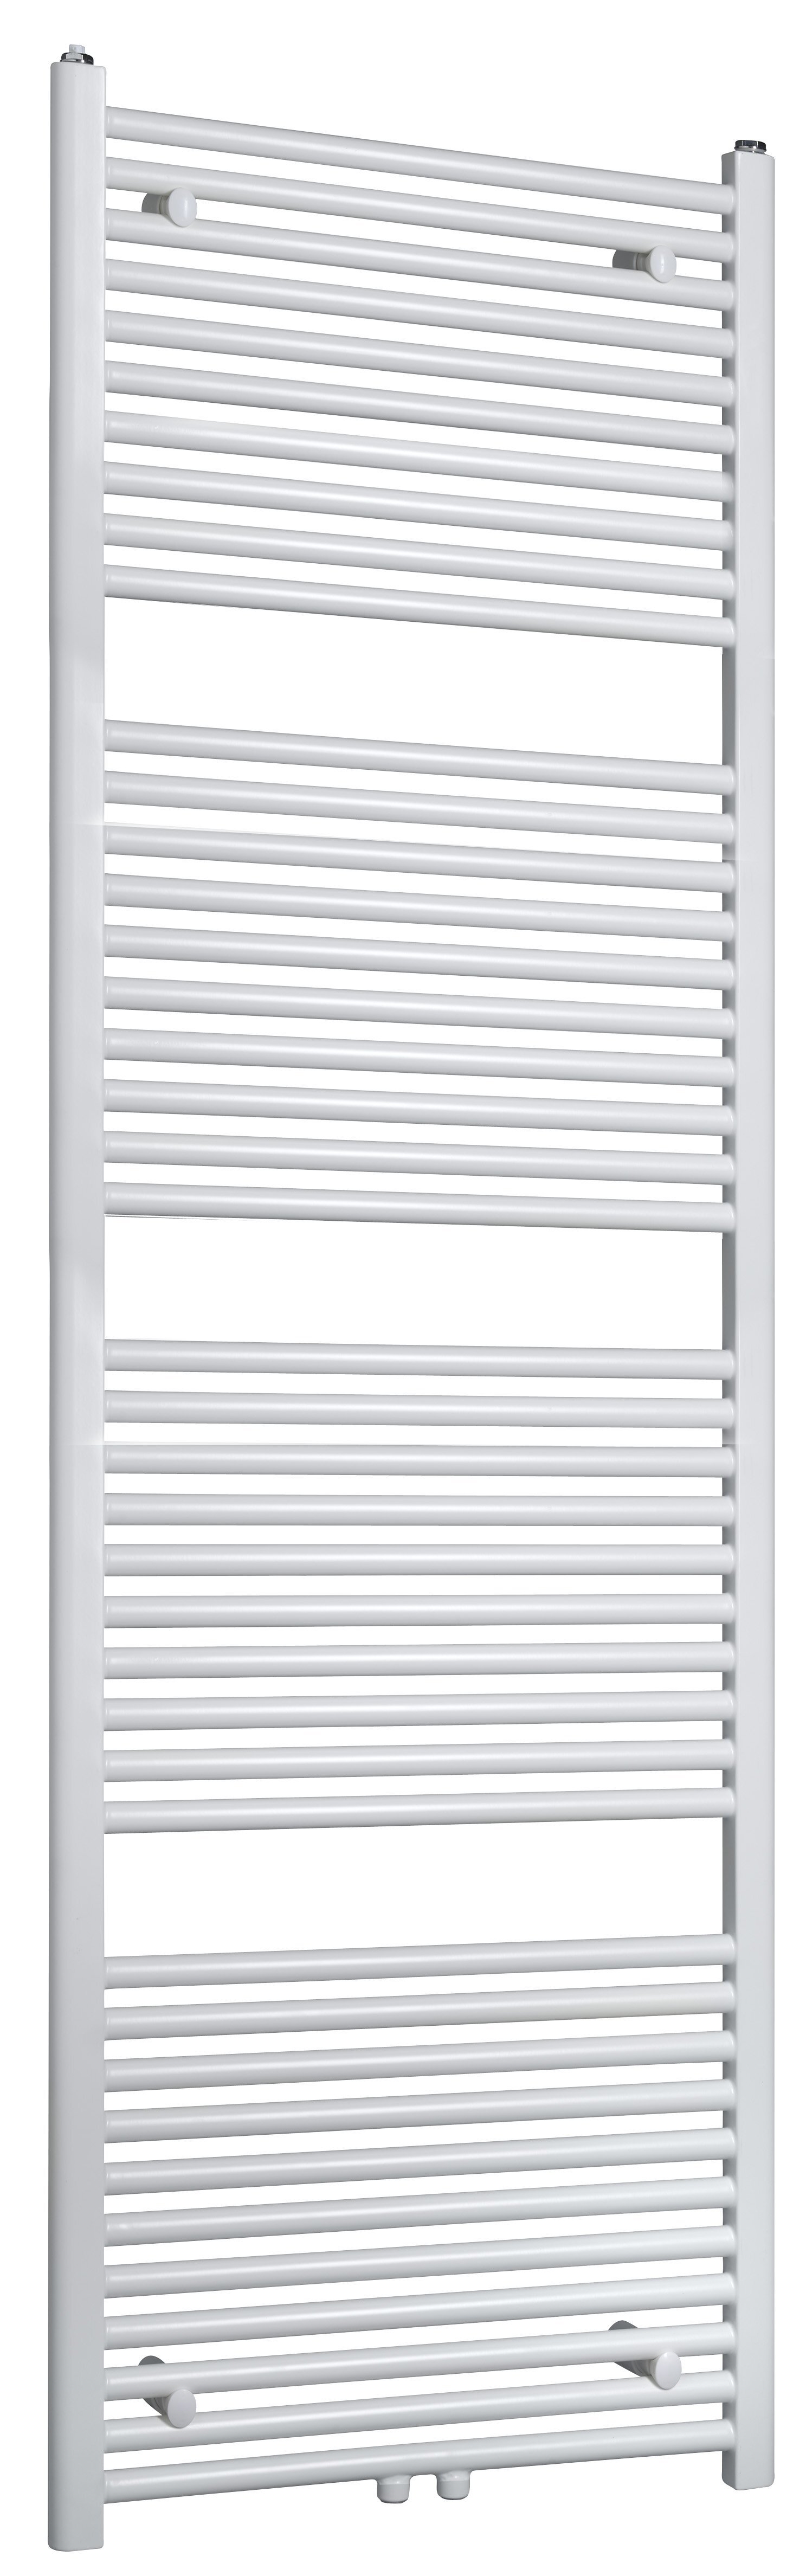 Best Design Zero badkamer radiator 180 x 60 cm wit